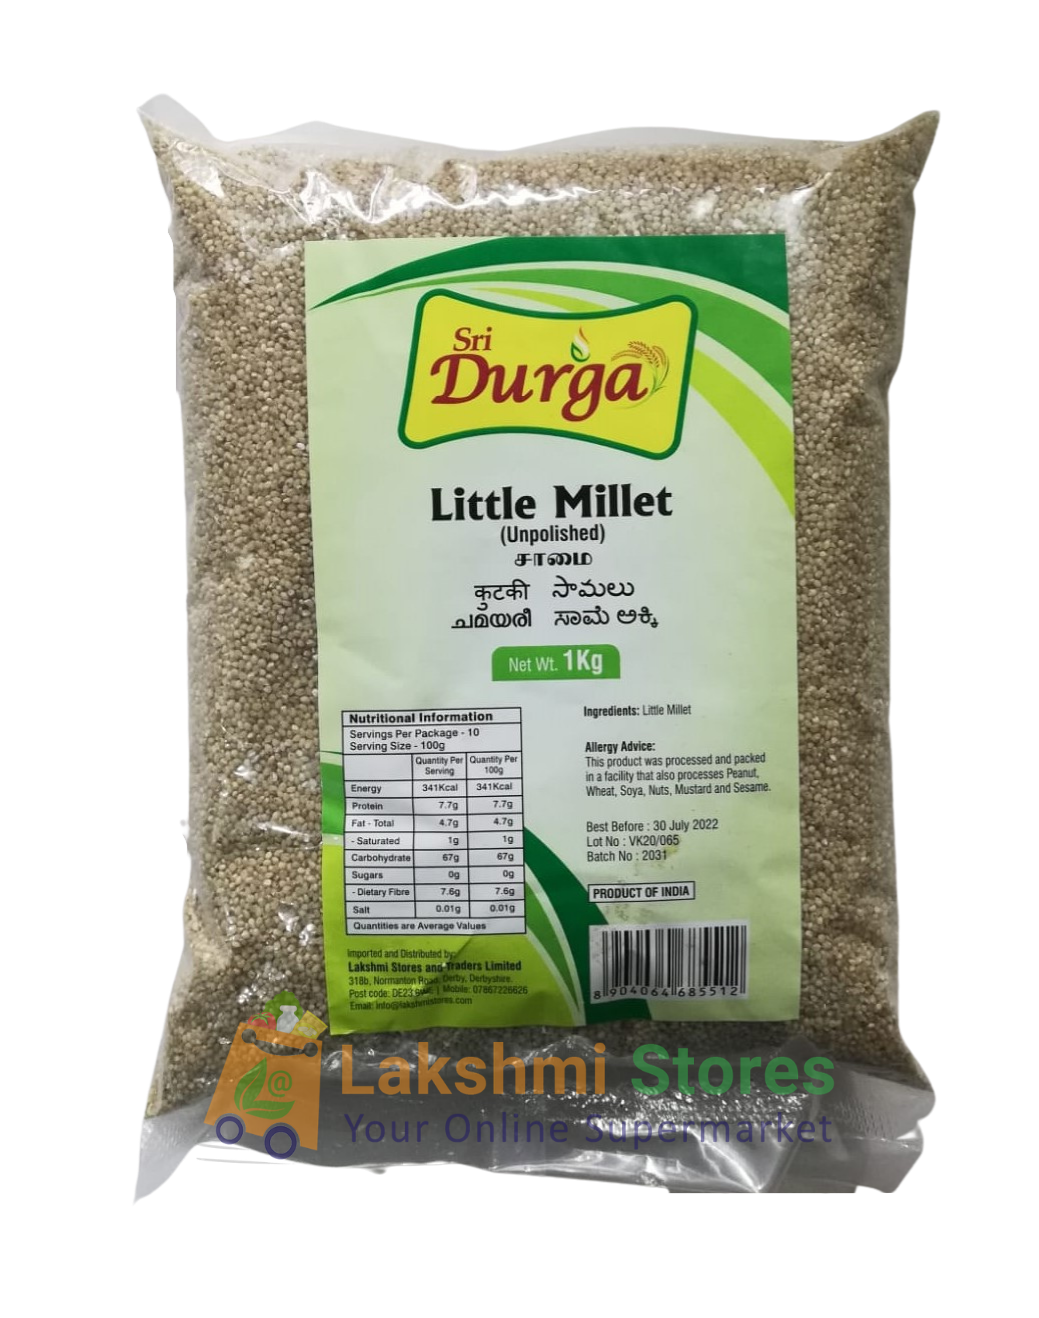 sri durga samai rice (little millet) 1kg - unpolished